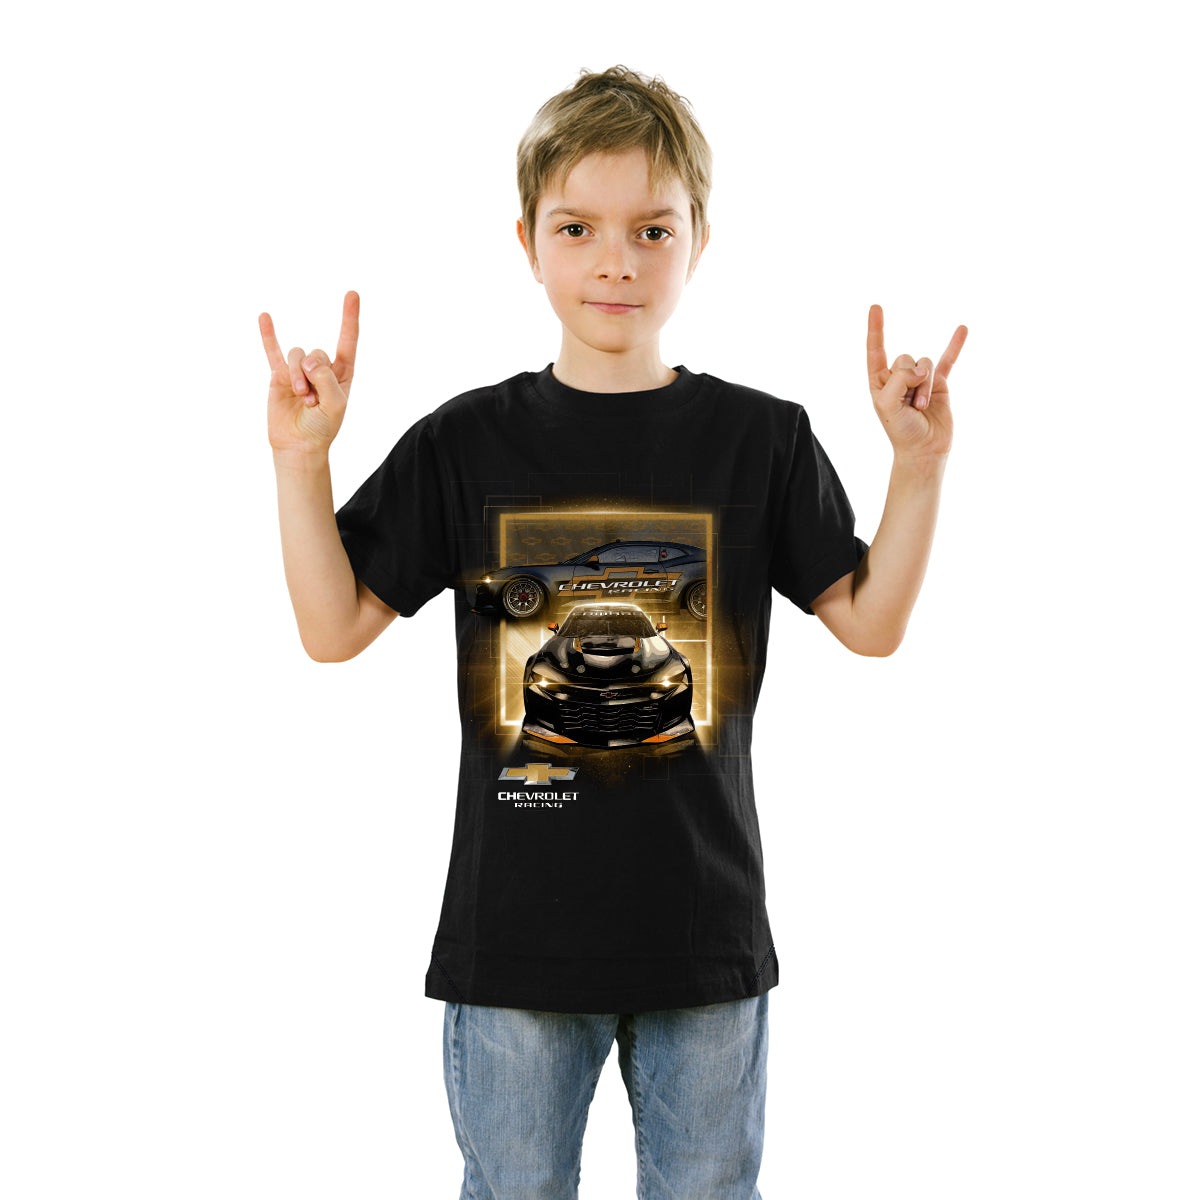 Chevrolet Racing Youth T-shirt